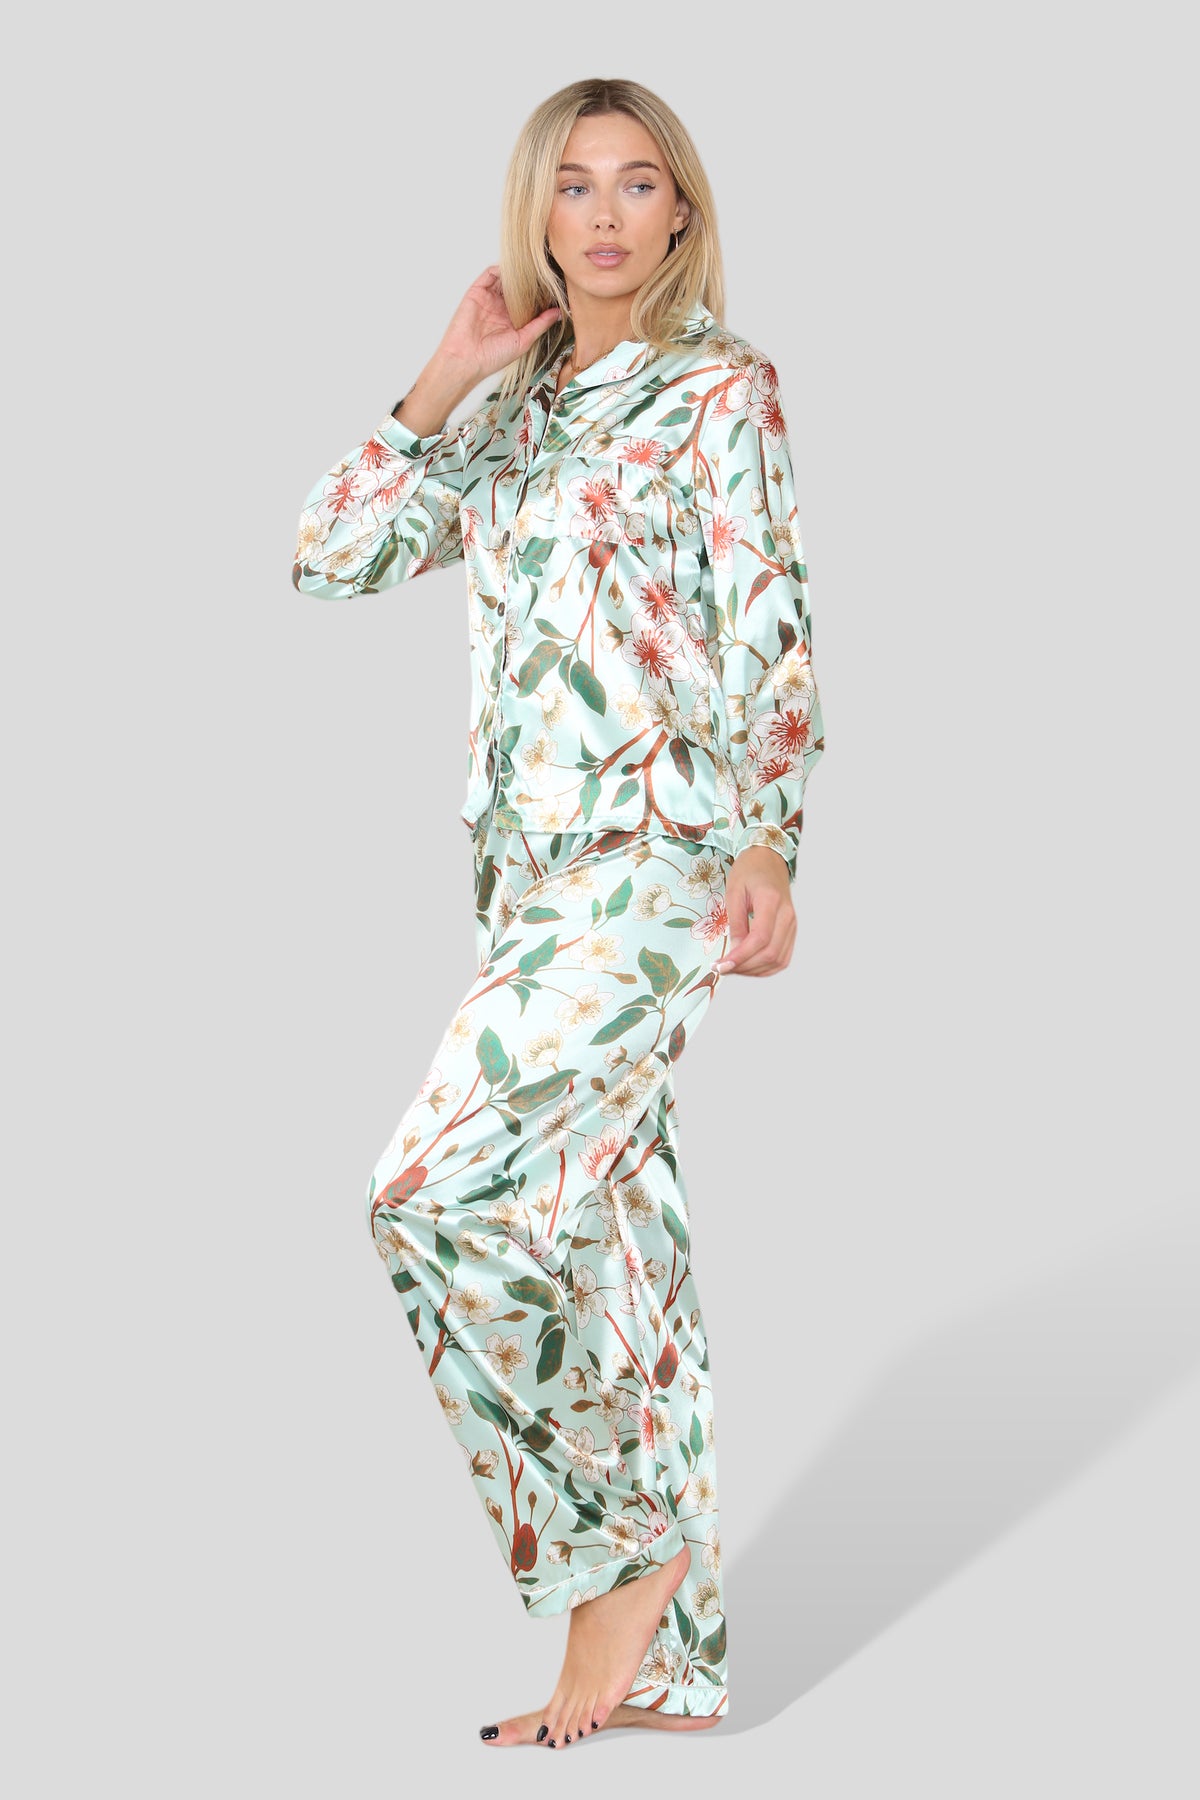 Pajama-Sets-Floral